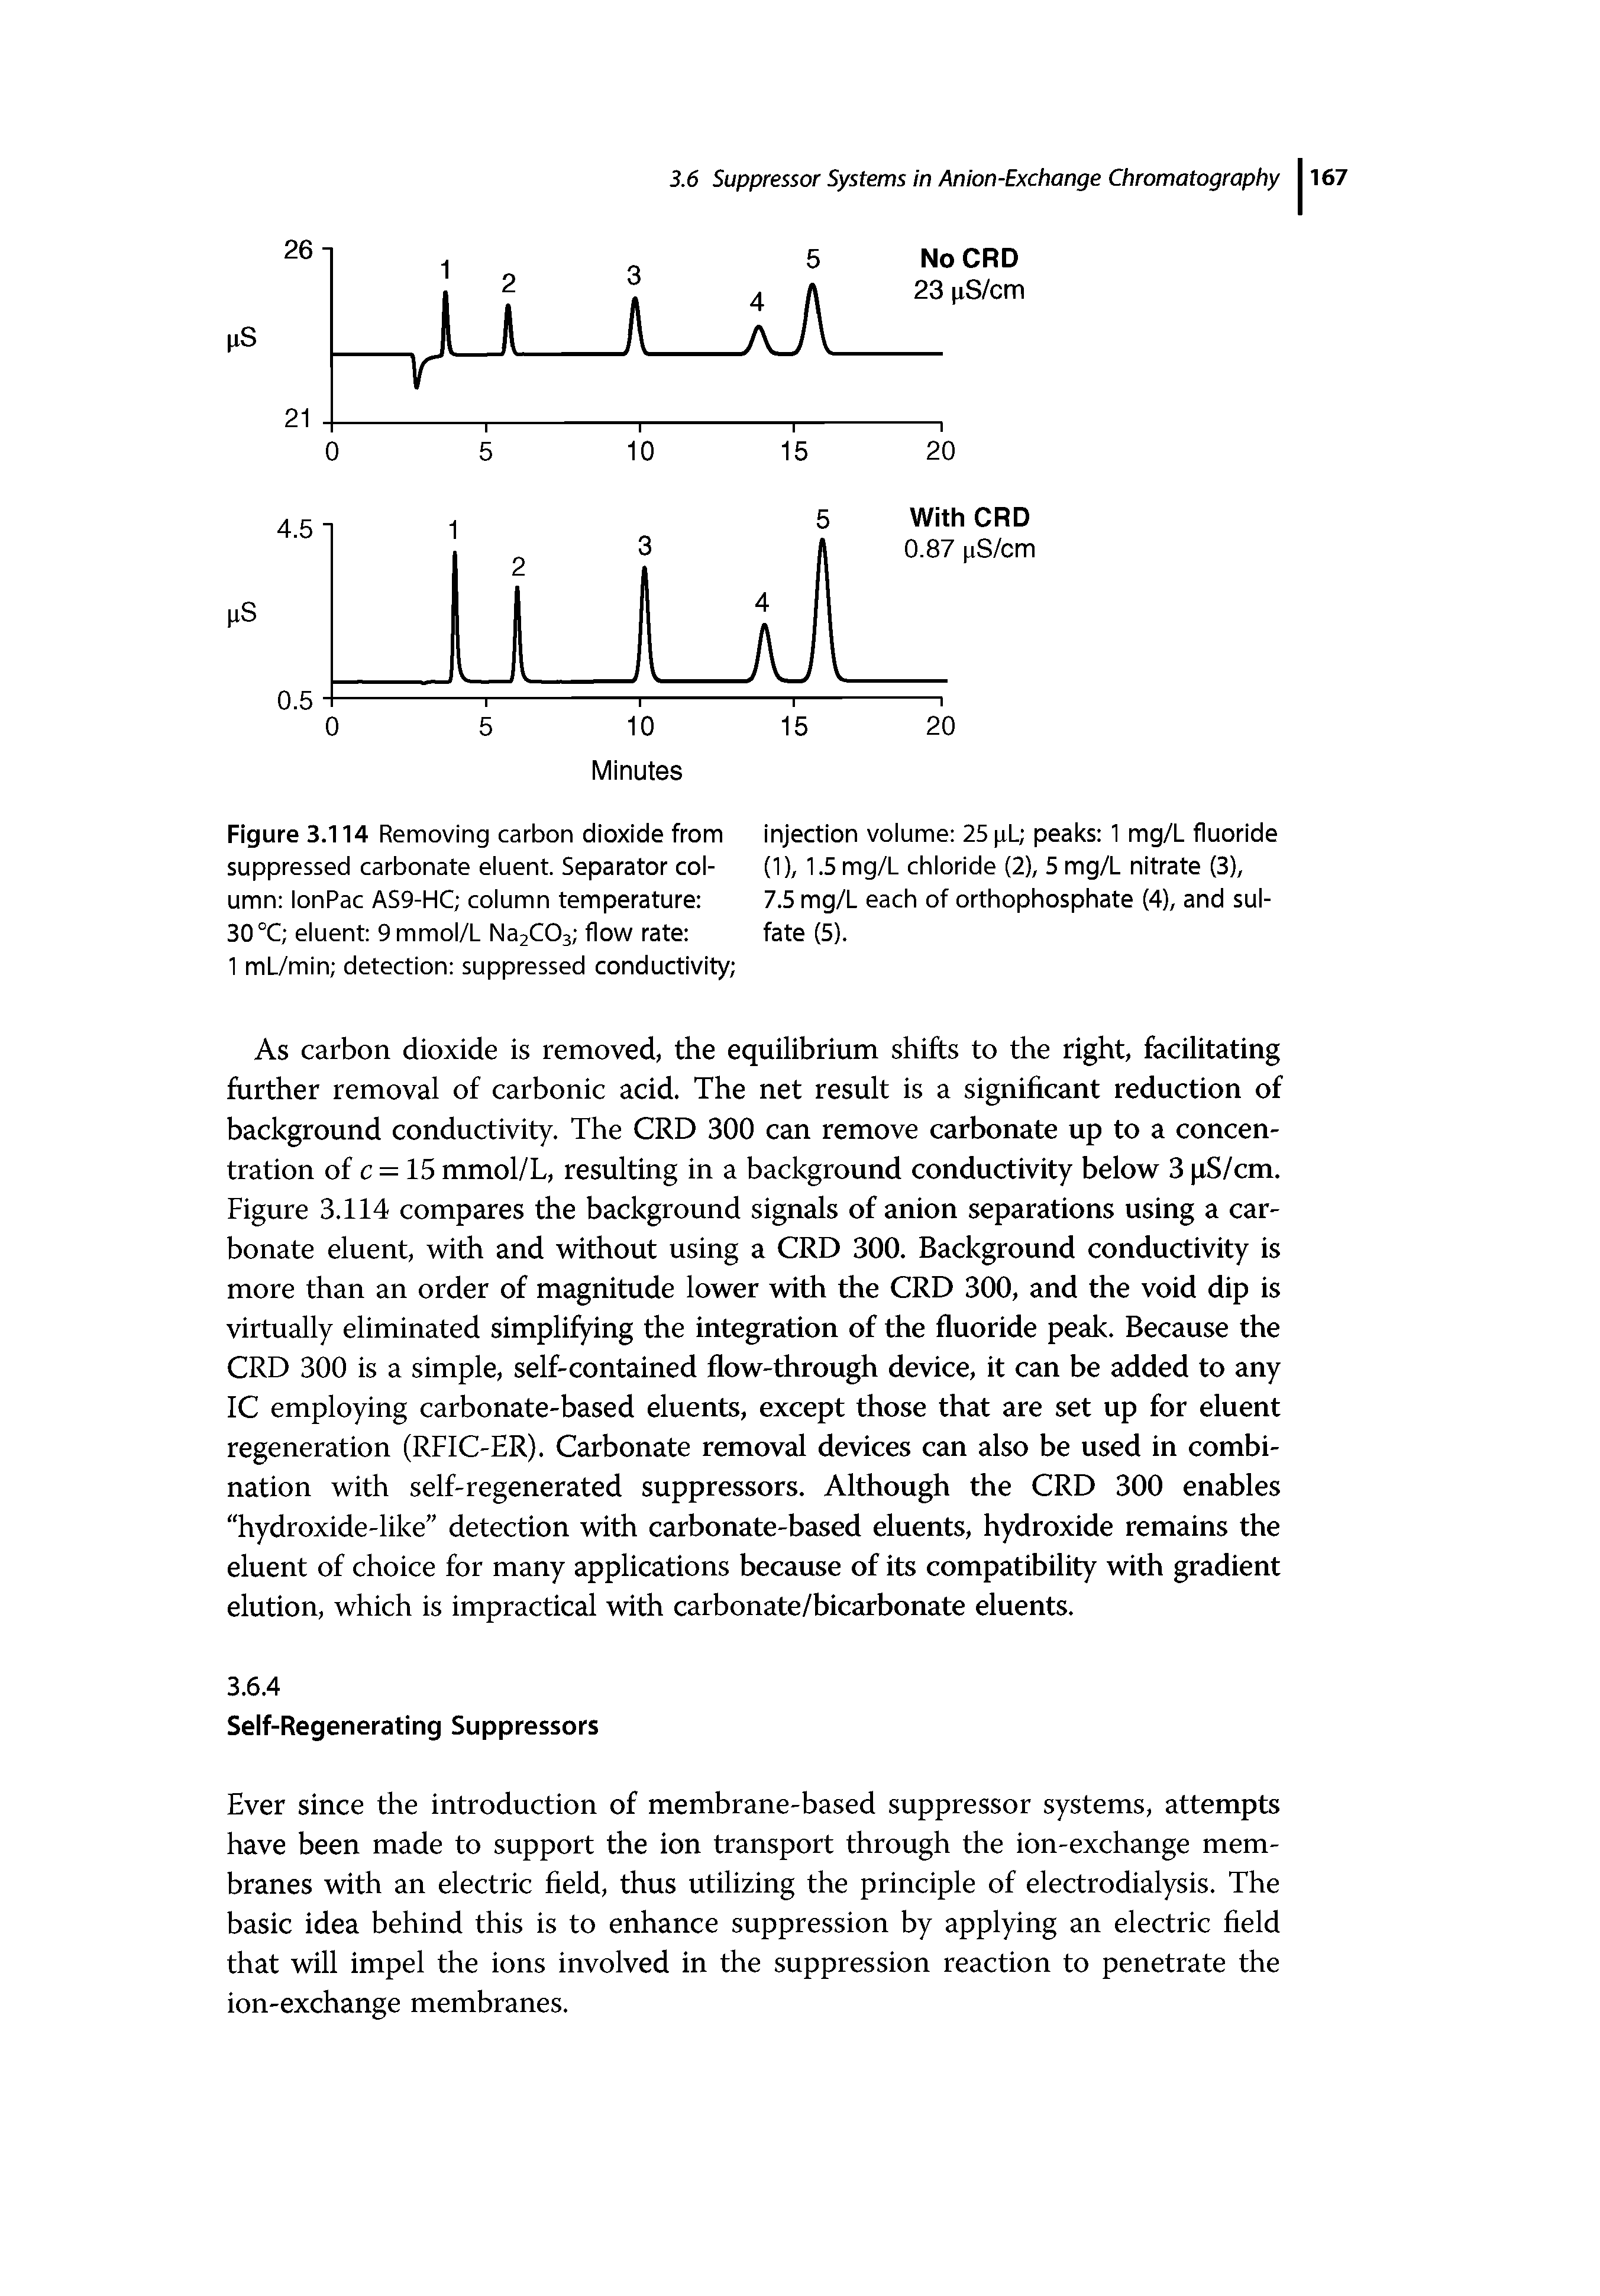 Figure 3.114 Removing carbon dioxide from suppressed carbonate eluent. Separator column lonPac AS9-HC column temperature ...